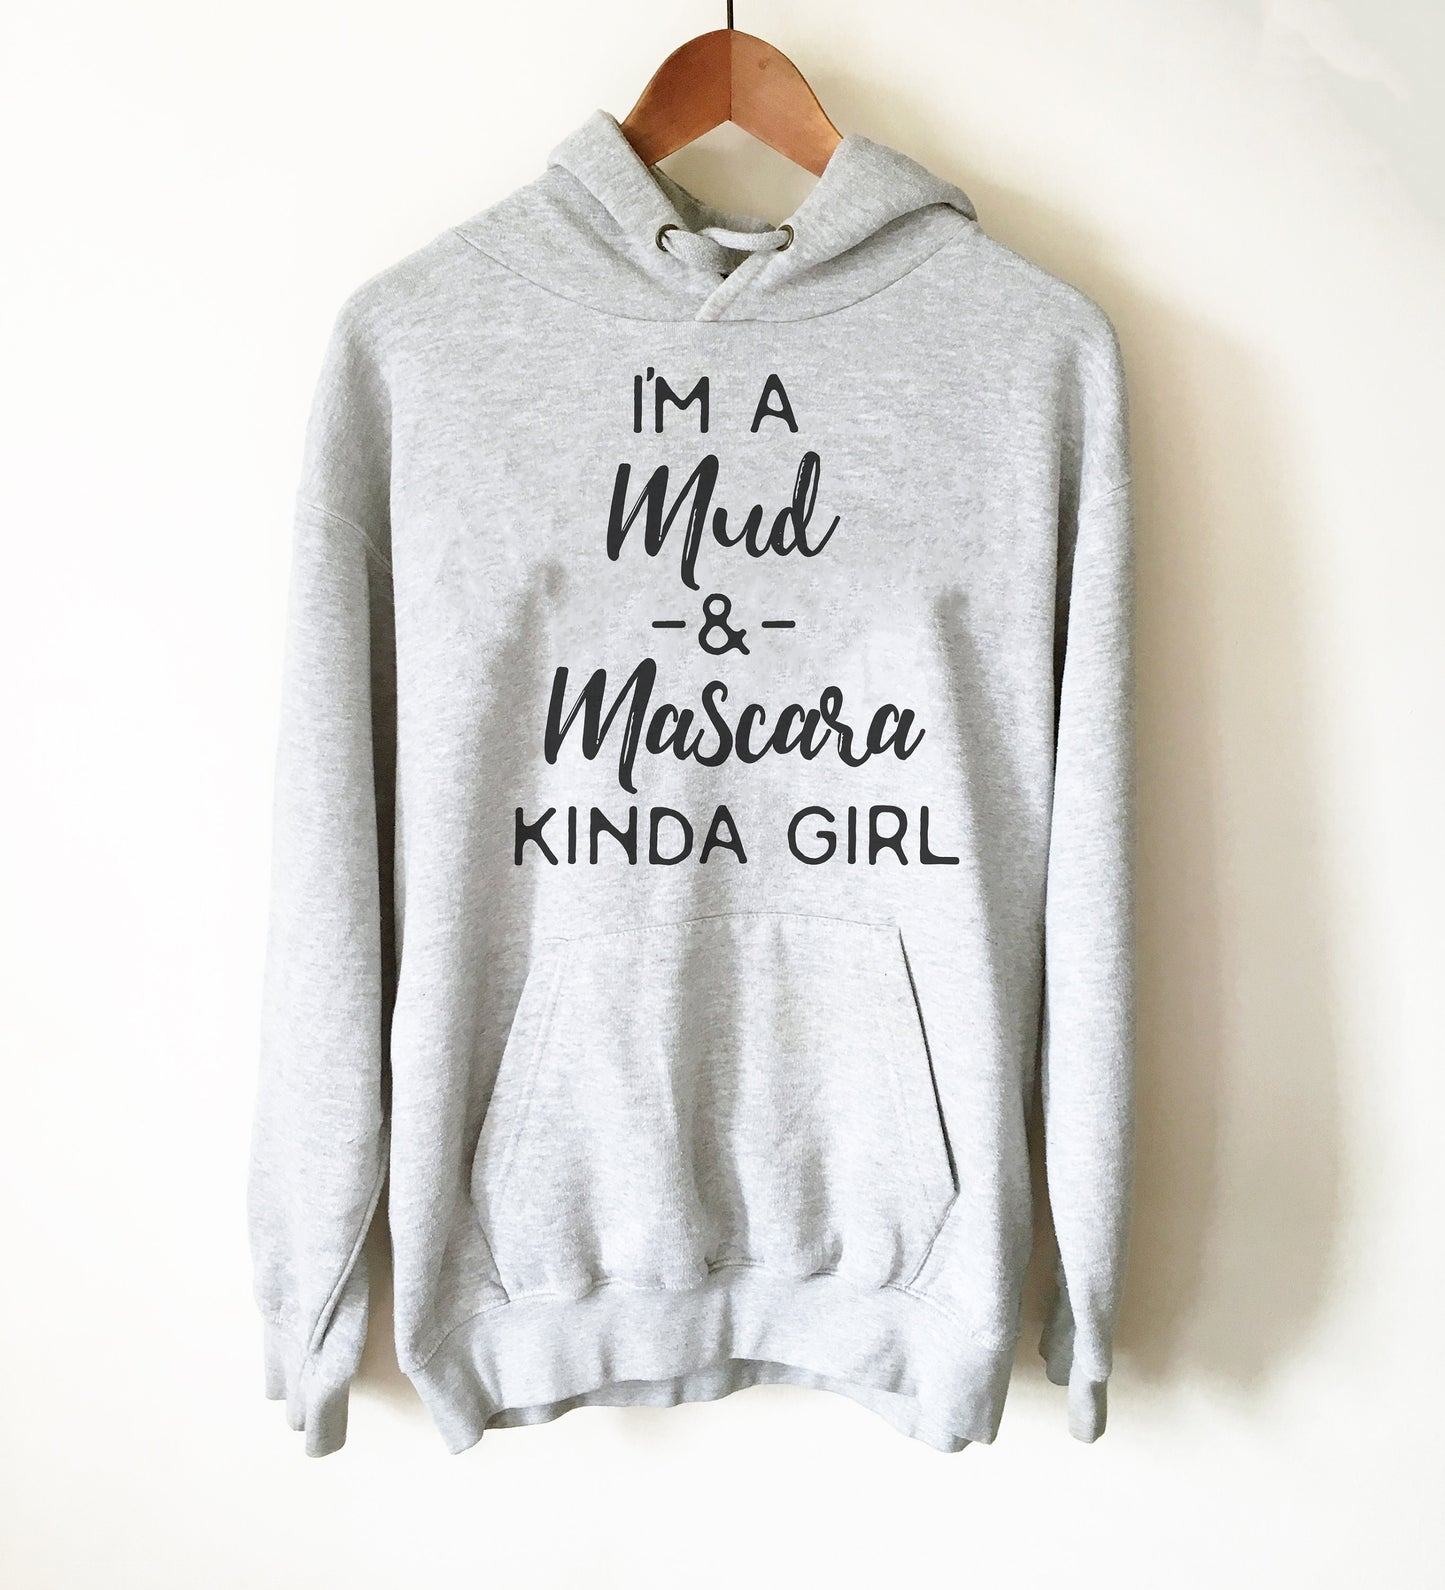 I'm A Mud & Mascara Kinda Girl Hoodie - Mudding Shirt, Off Roading Shirt, Country Shirt, 4X4 Shirt, Southern Girl Shirt